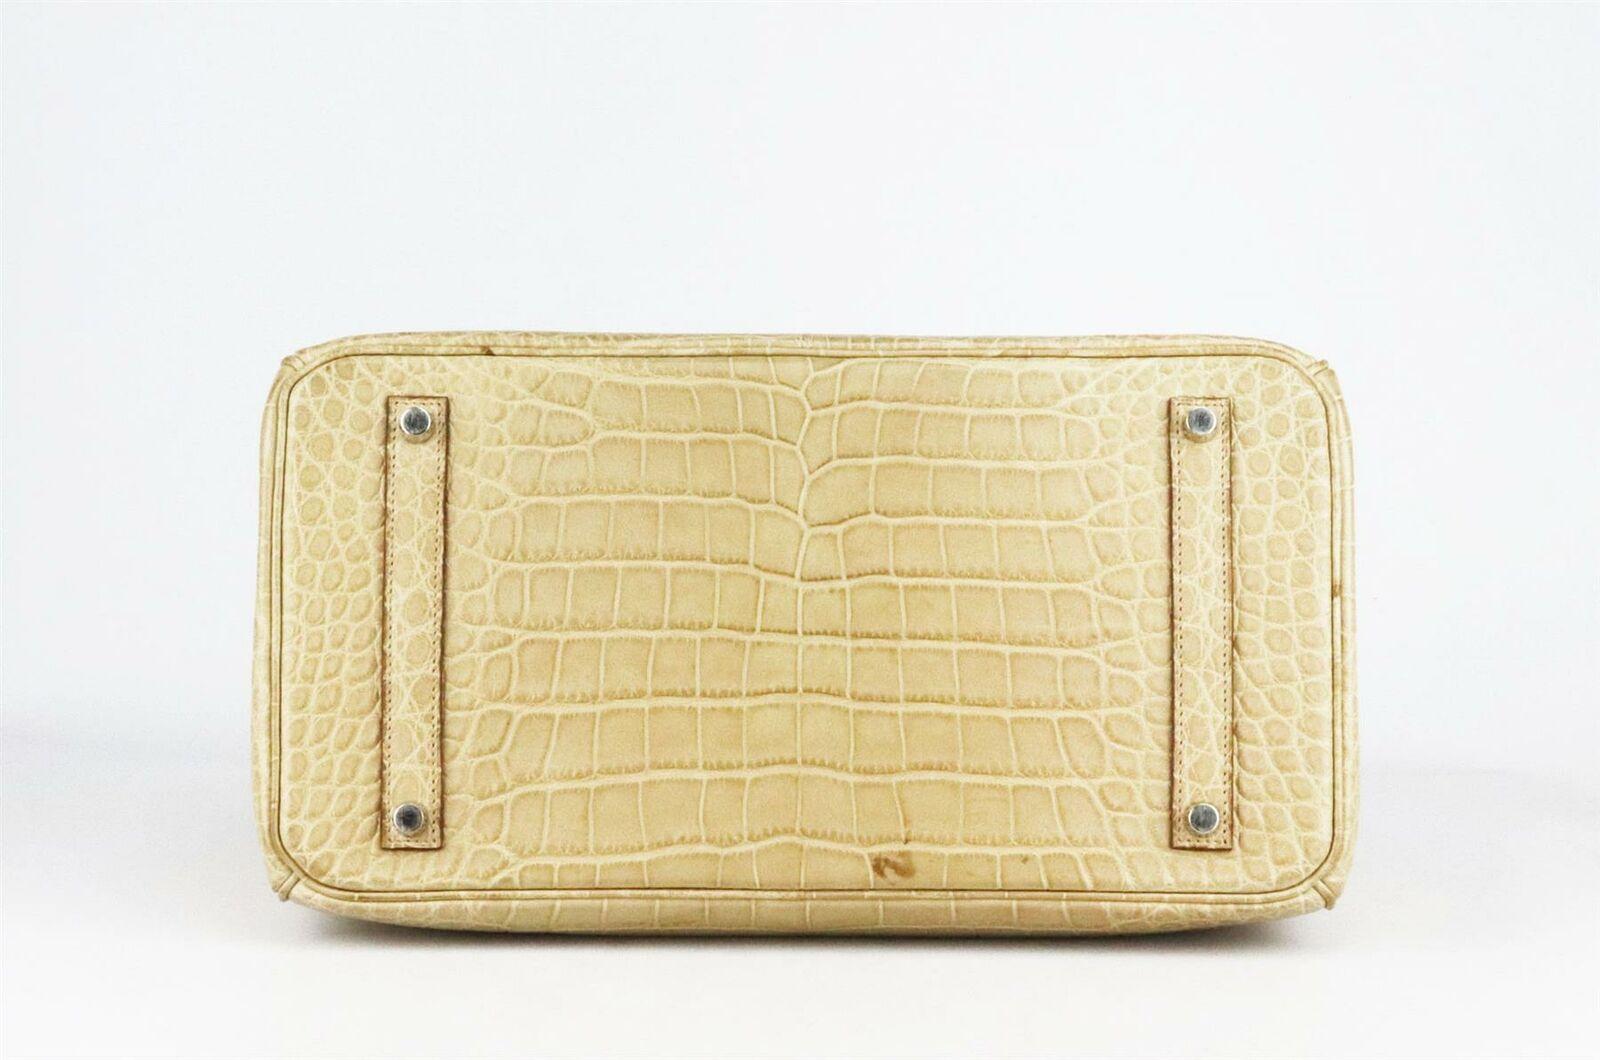 Hermès 2010 Birkin 35cm Matte Niloticus Crocodile Leather Bag In Excellent Condition In London, GB